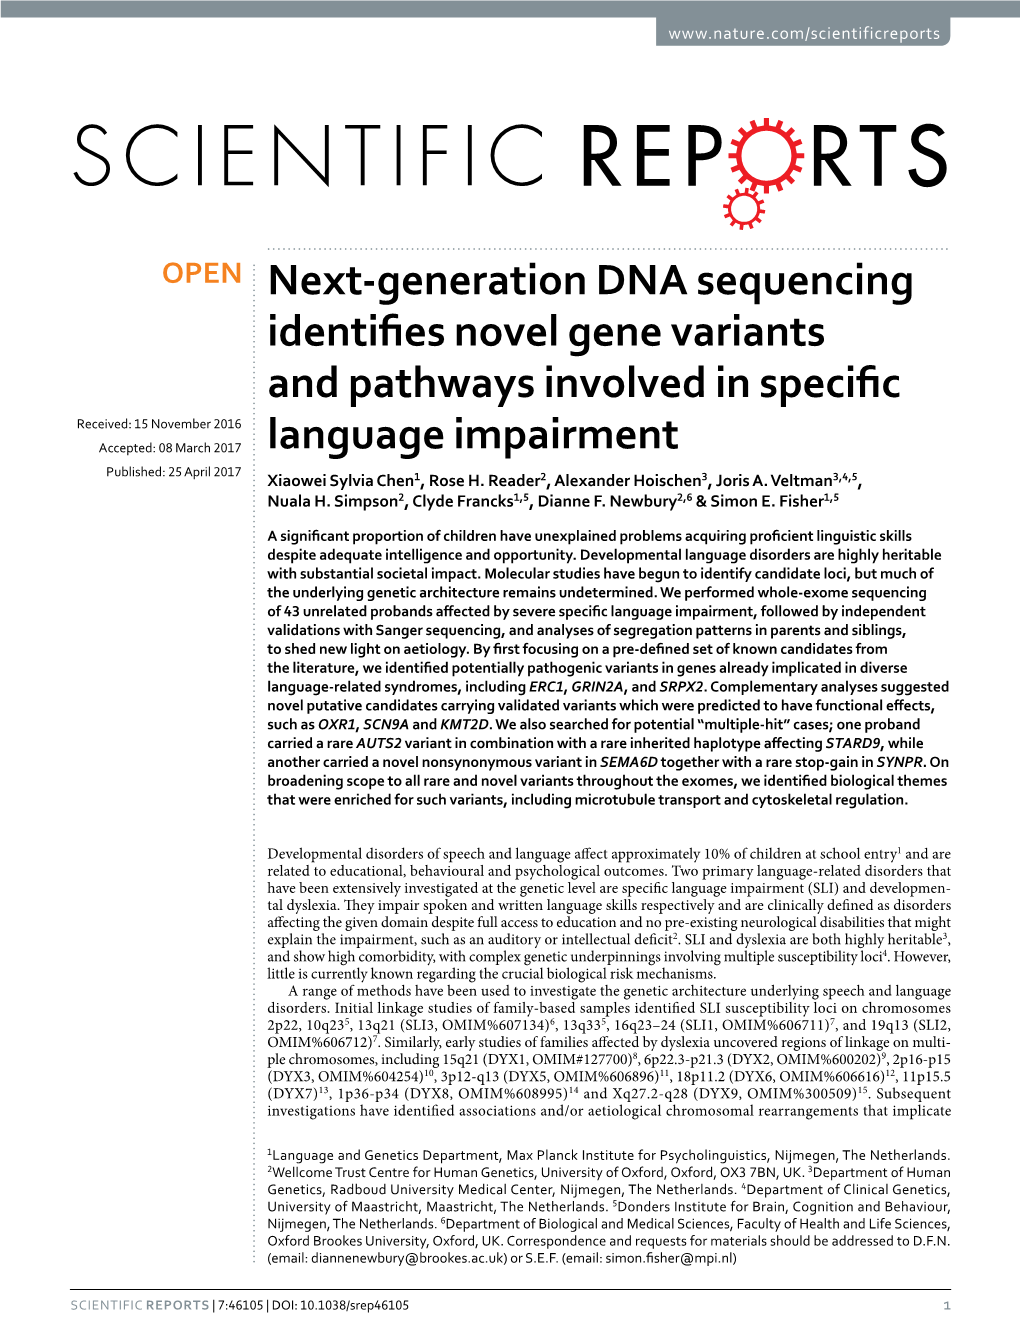 Next-Generation DNA Sequencing Identifies Novel Gene Variants And